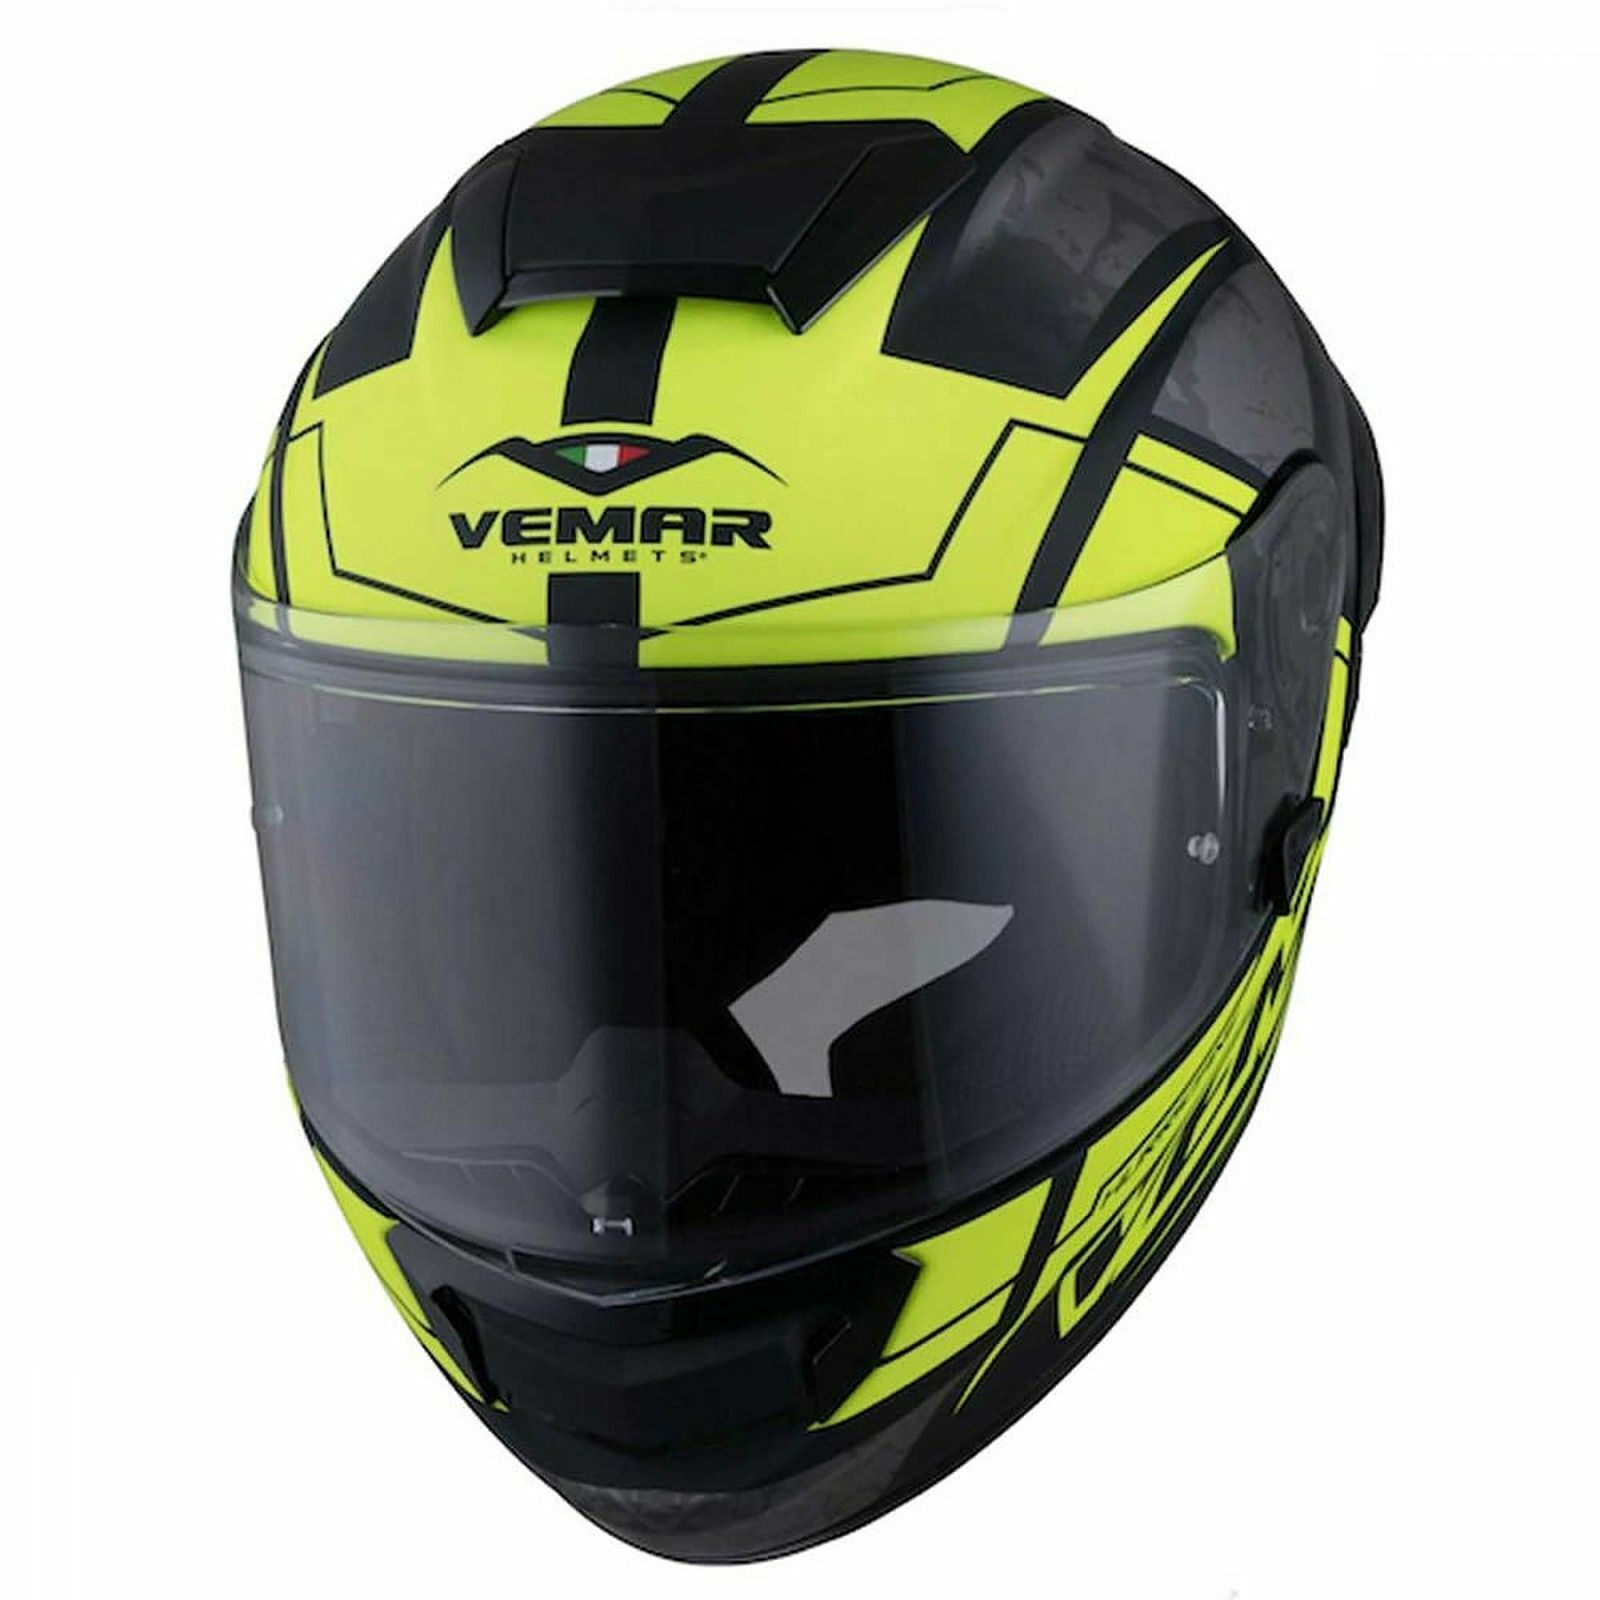 Vemar Hurricane Claw Motorcycle Full Face Helmet - Matt Silver / Fluo Yellow